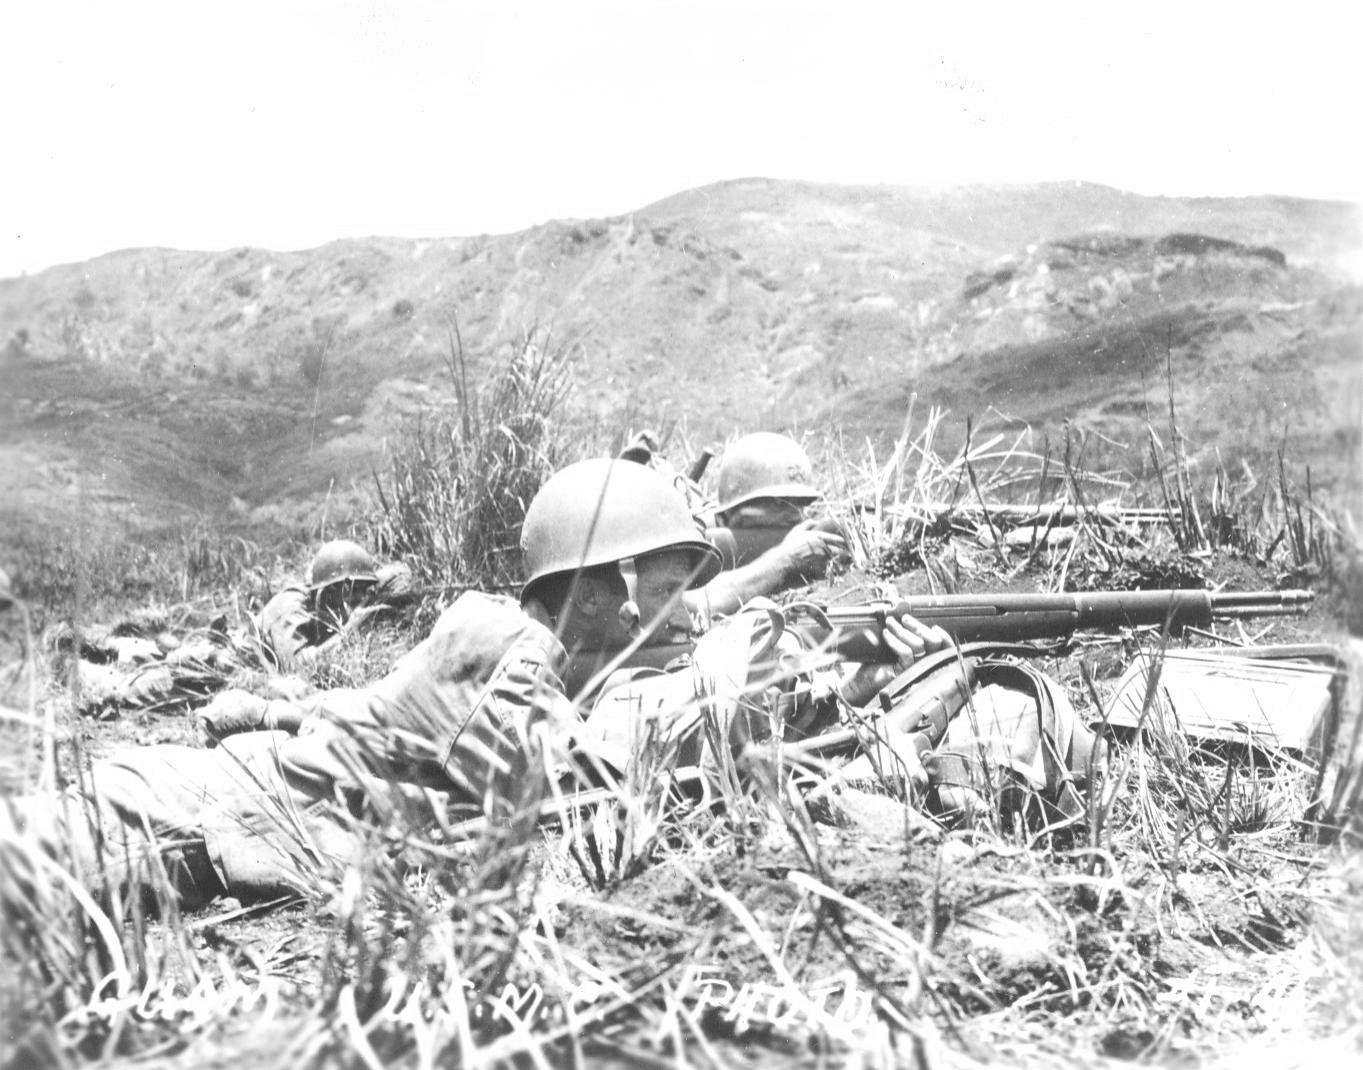 US Marines fighting on Guam with M1 Garand rifles, Jul-Aug 1944